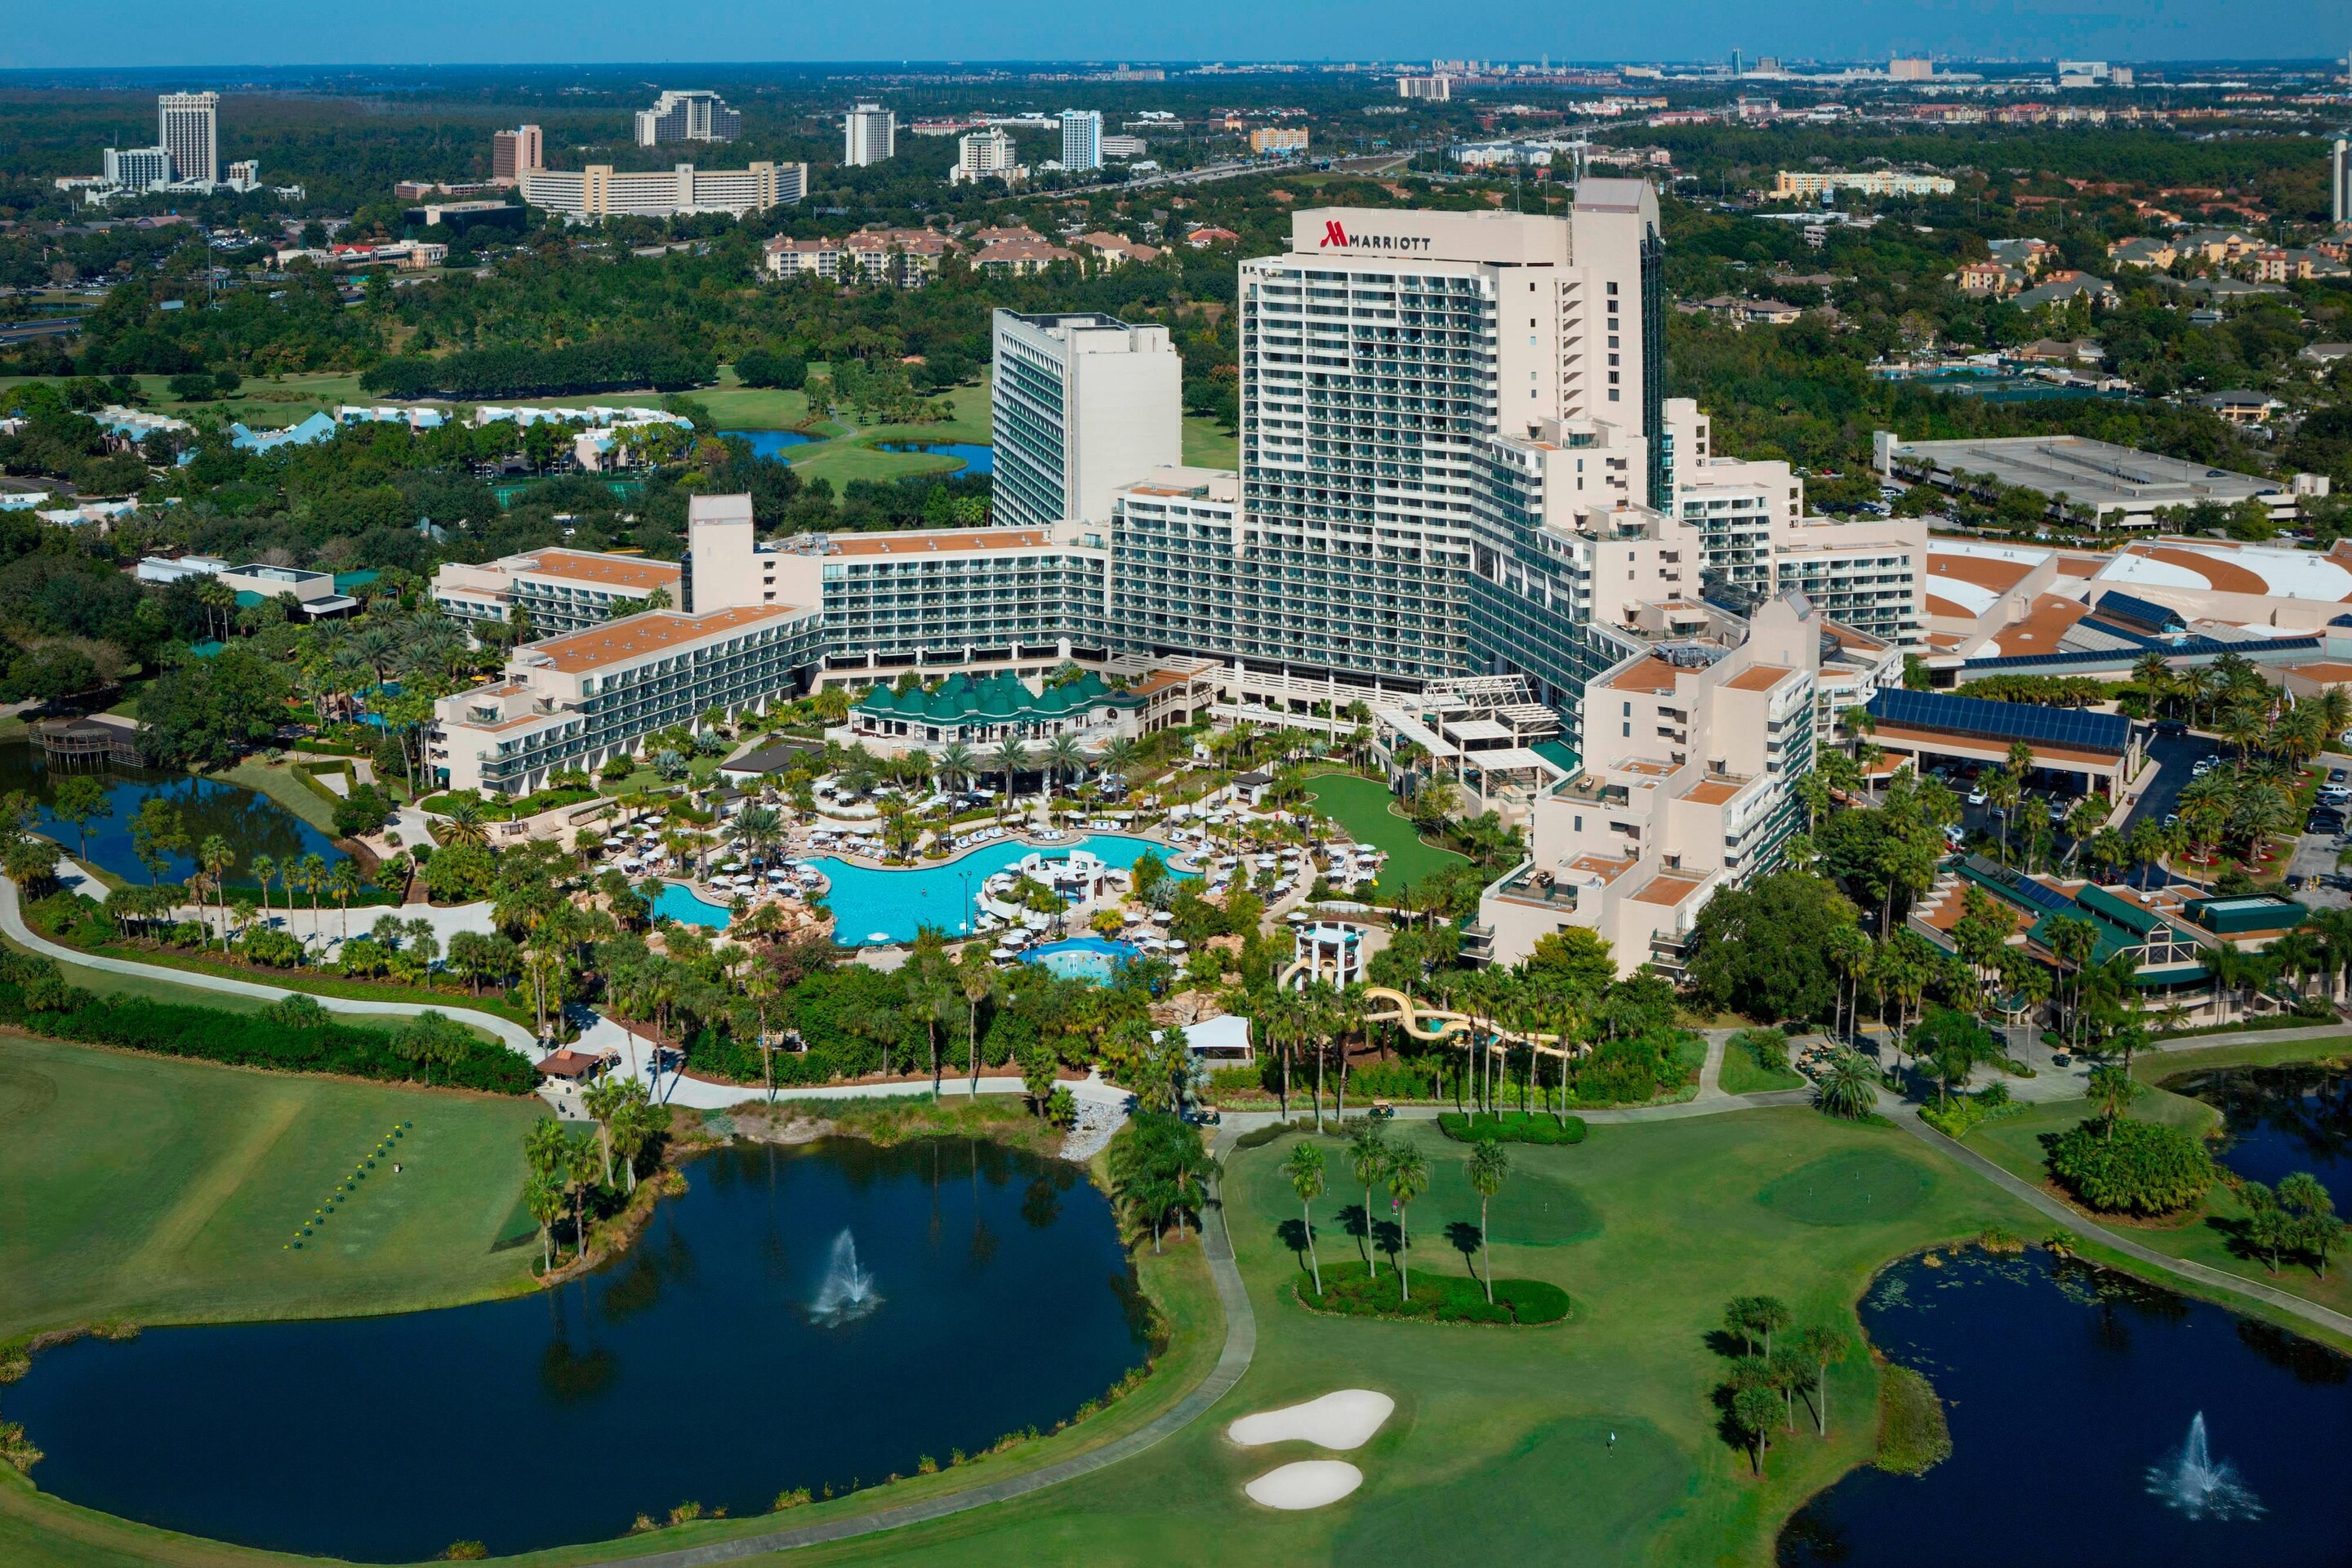 Orlando World Center Marriott unveils major expansion that touches